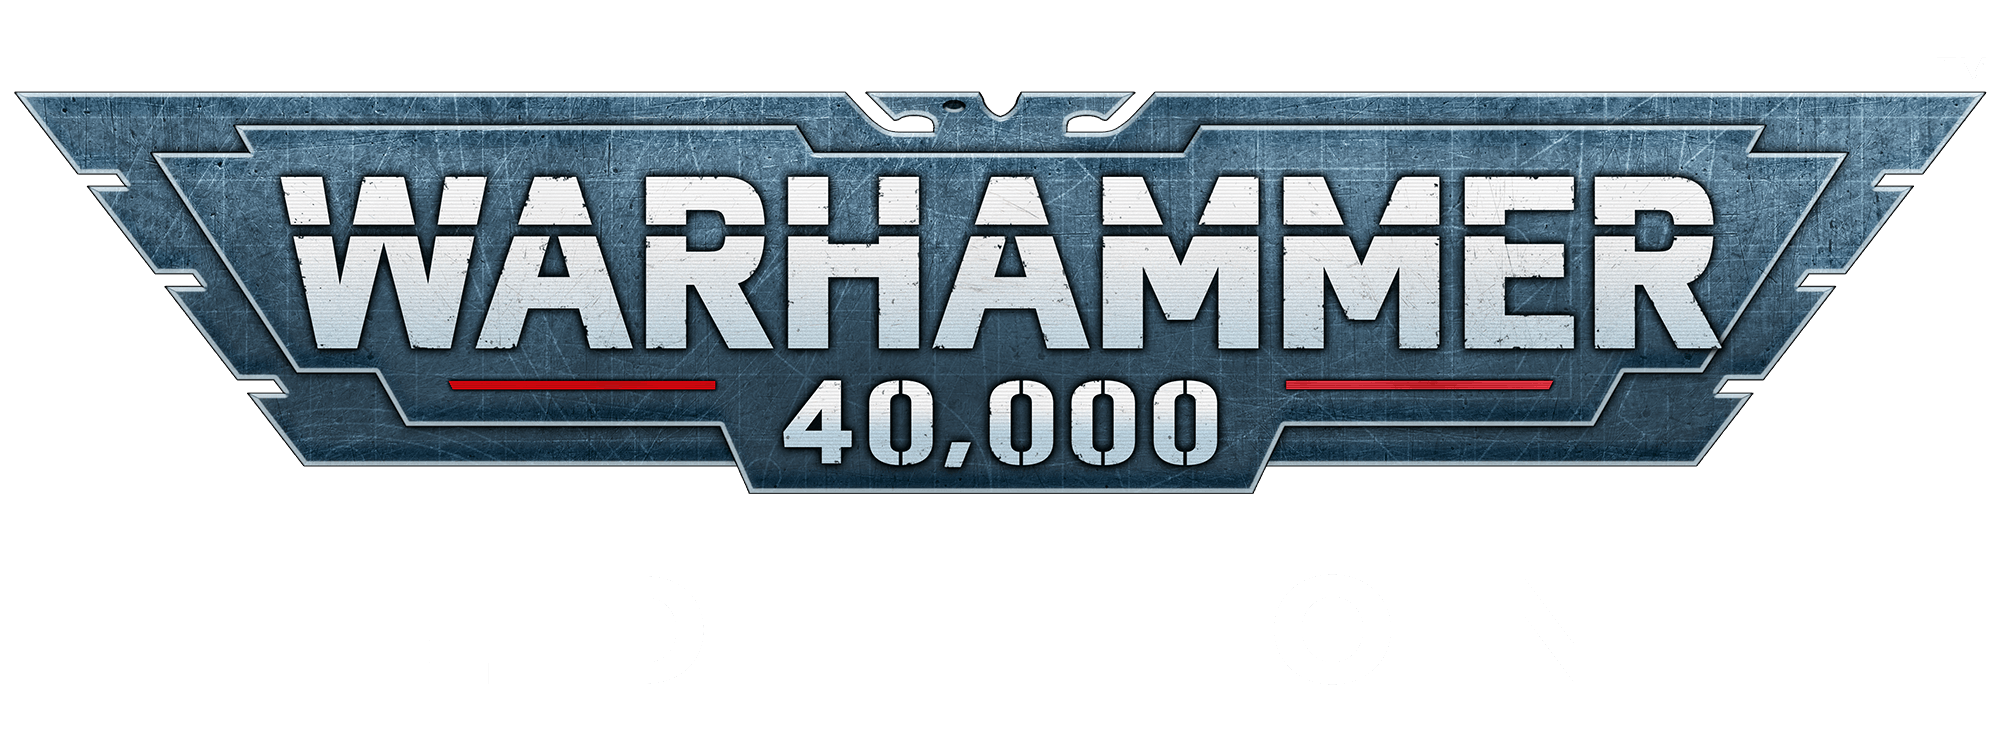 noblechairs Warhammer 40,000 title logo